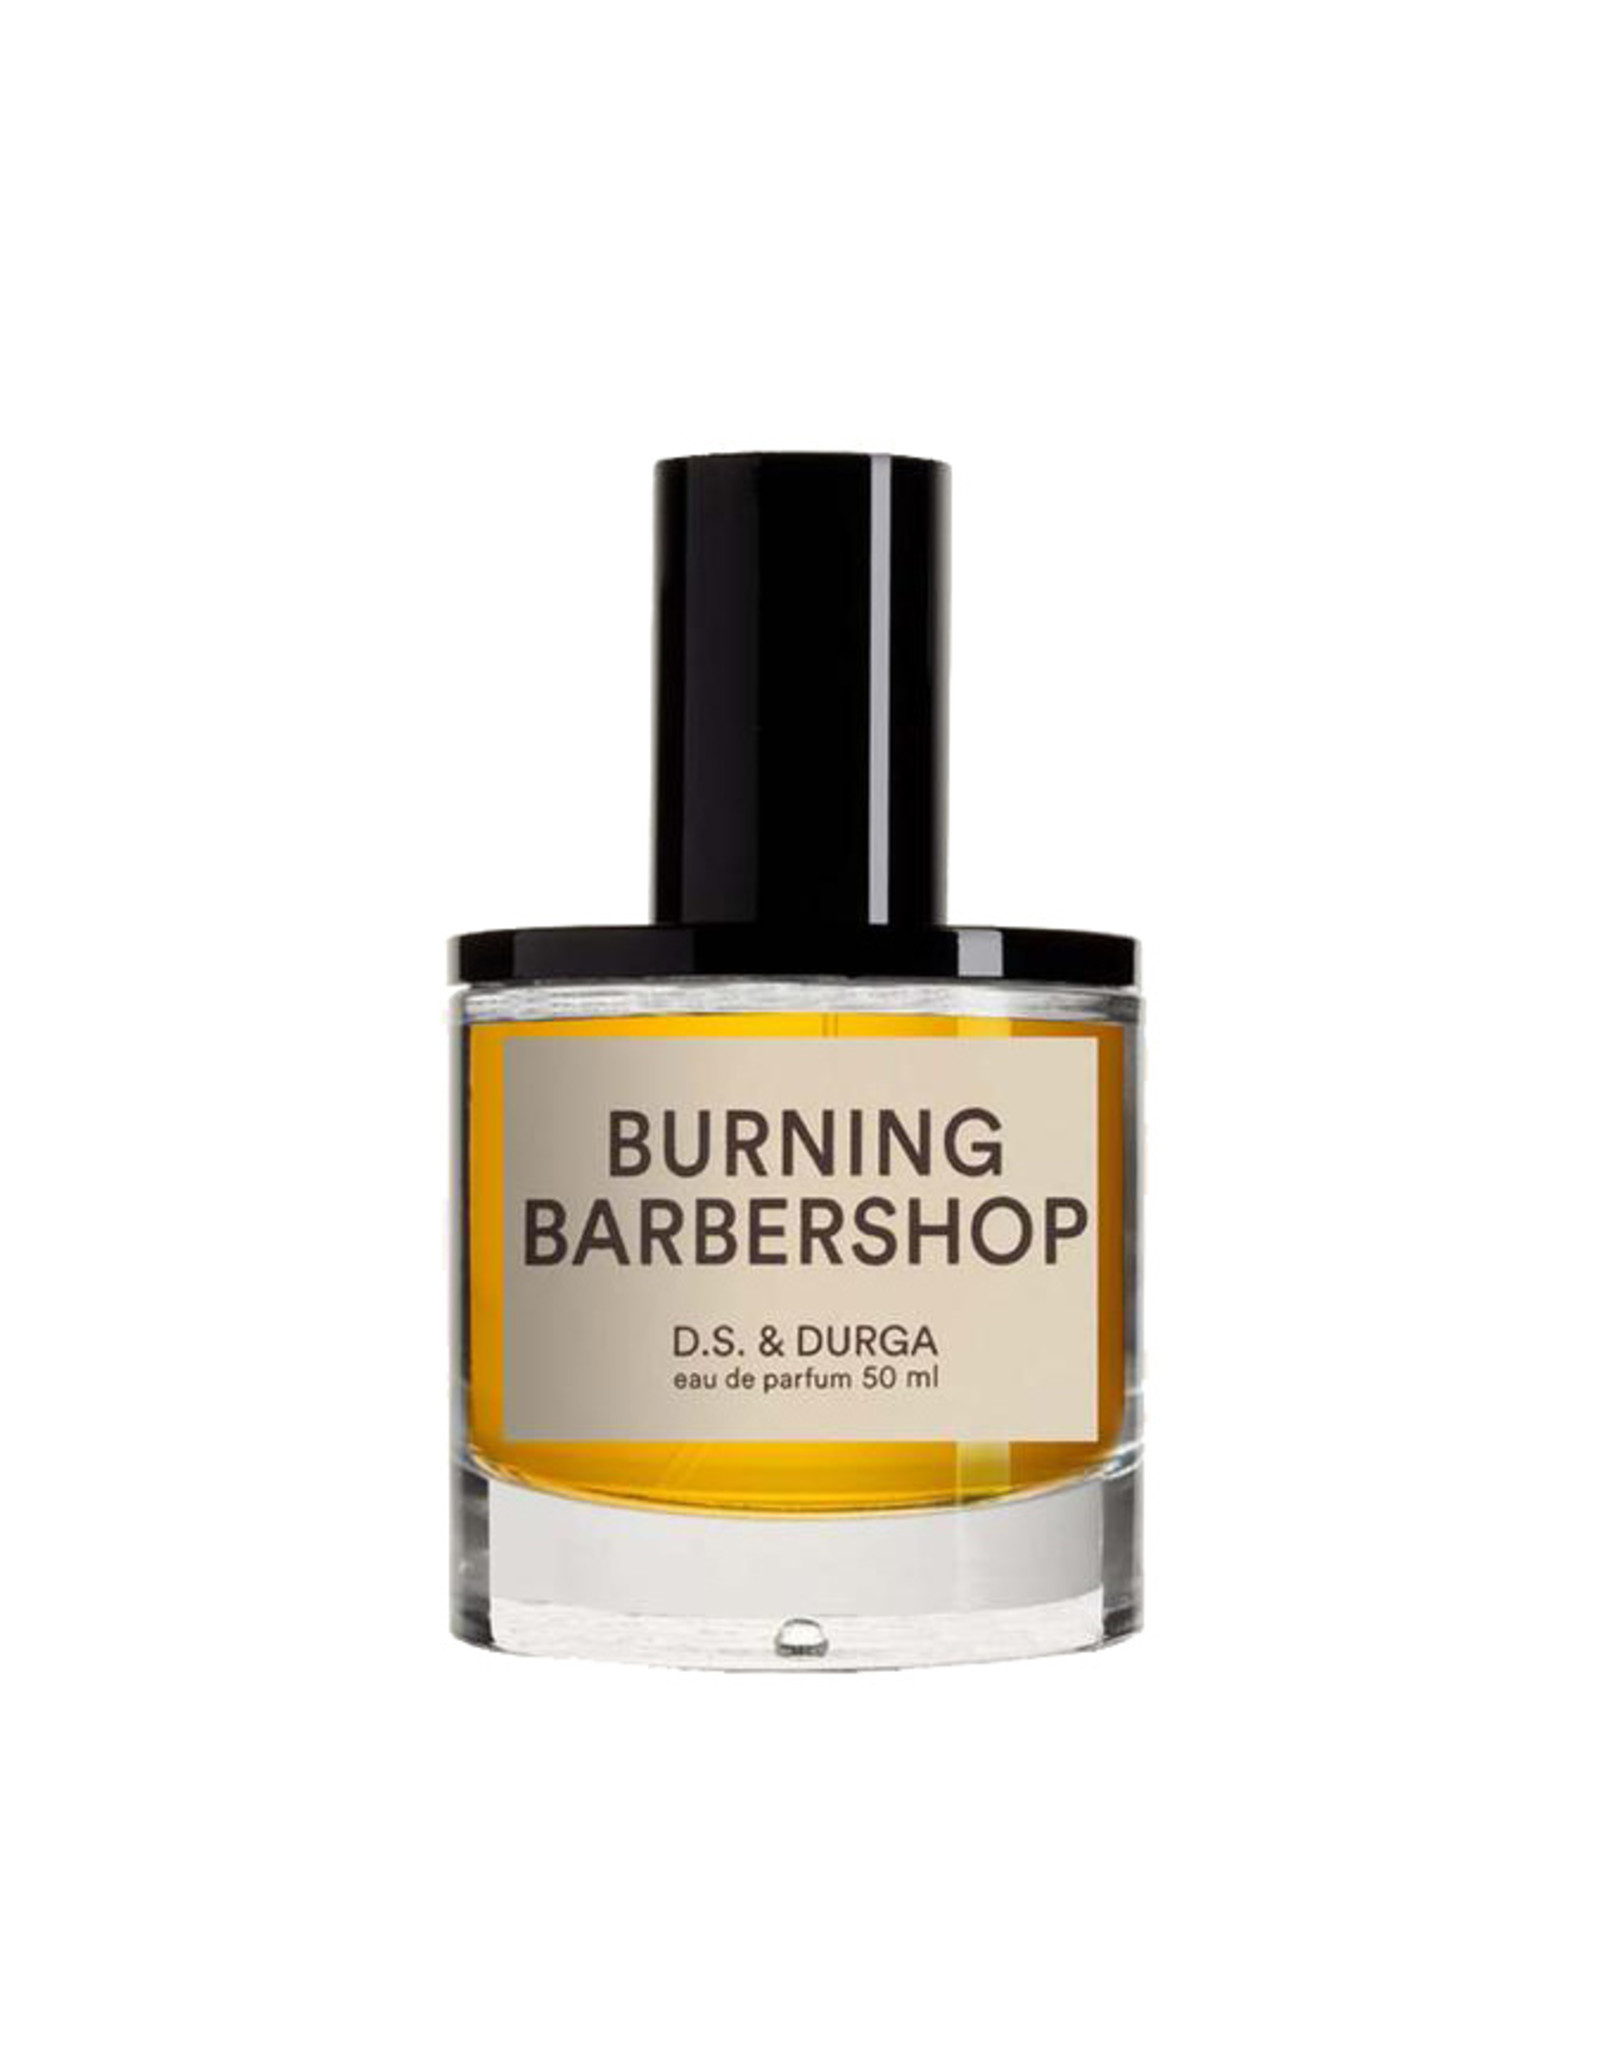 D.S. & DURGA Burning Barbershop - Eau de Parfum - 50mL